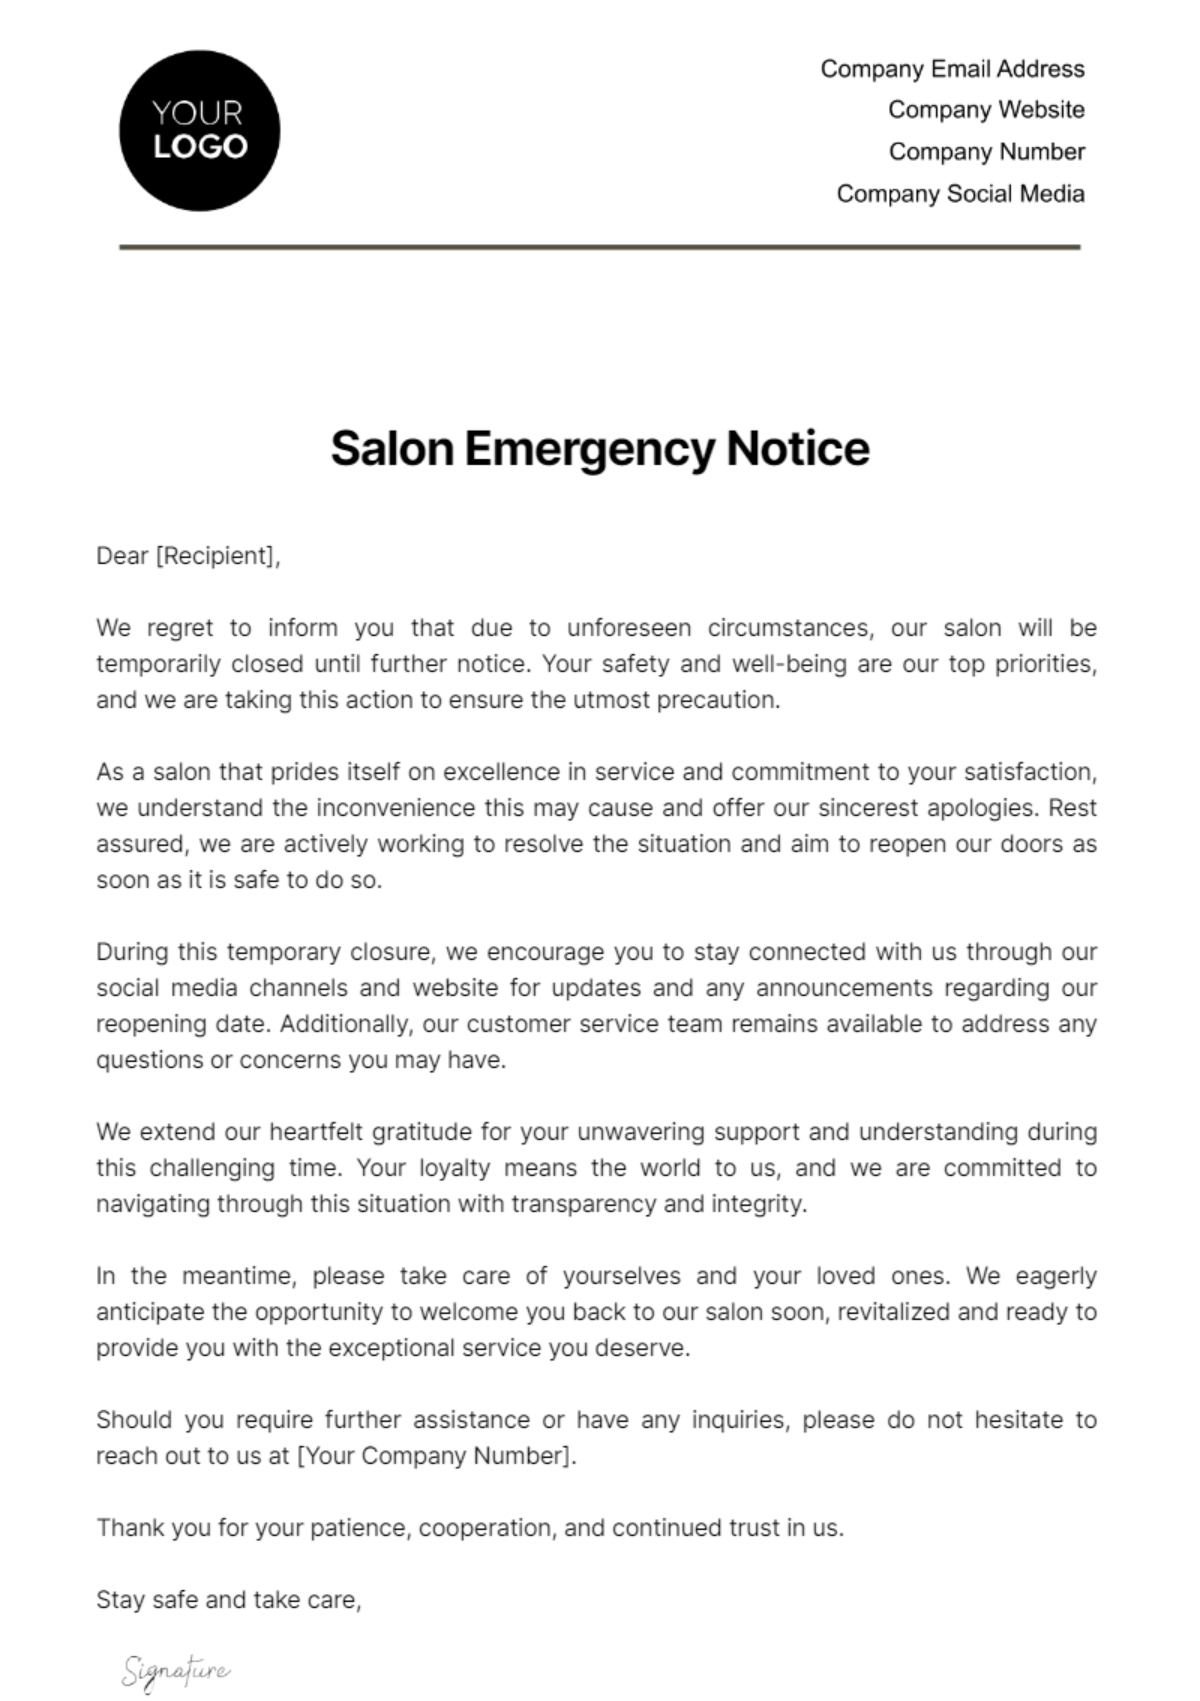 Salon Emergency Notice Template